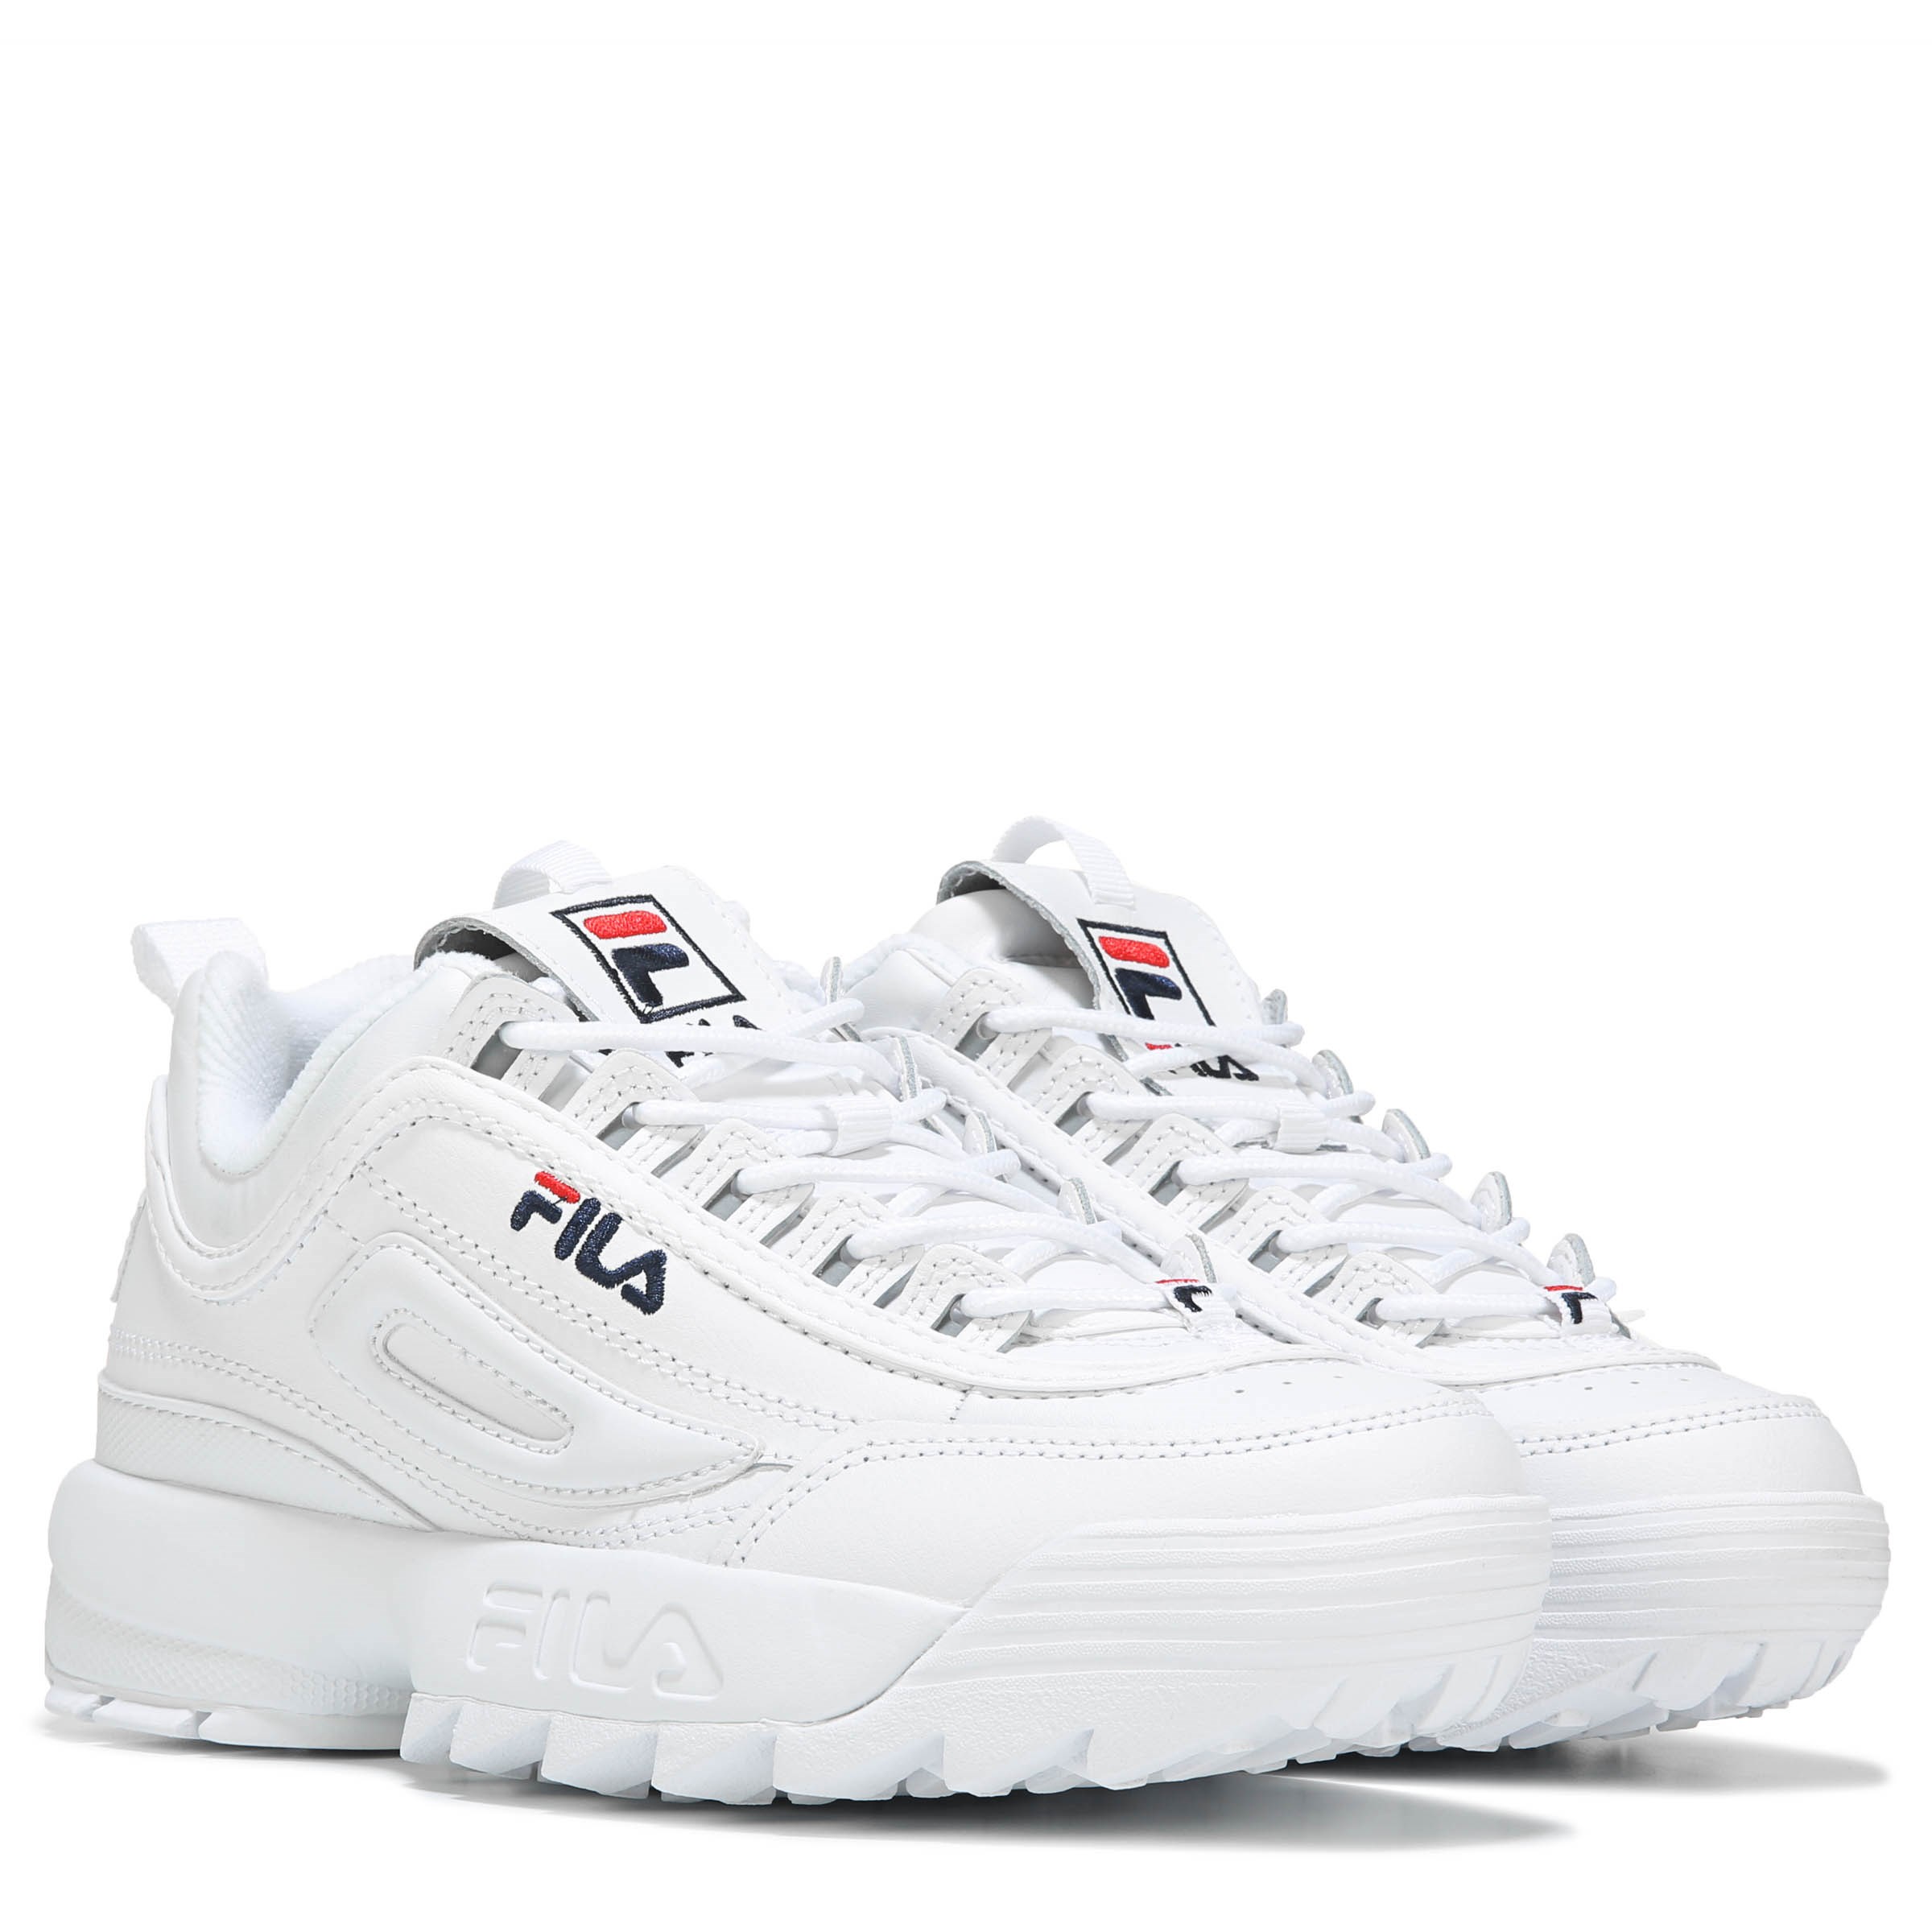 Men Fila Memory Foam Running Sneakers Size 9.5 Color Blk./White 